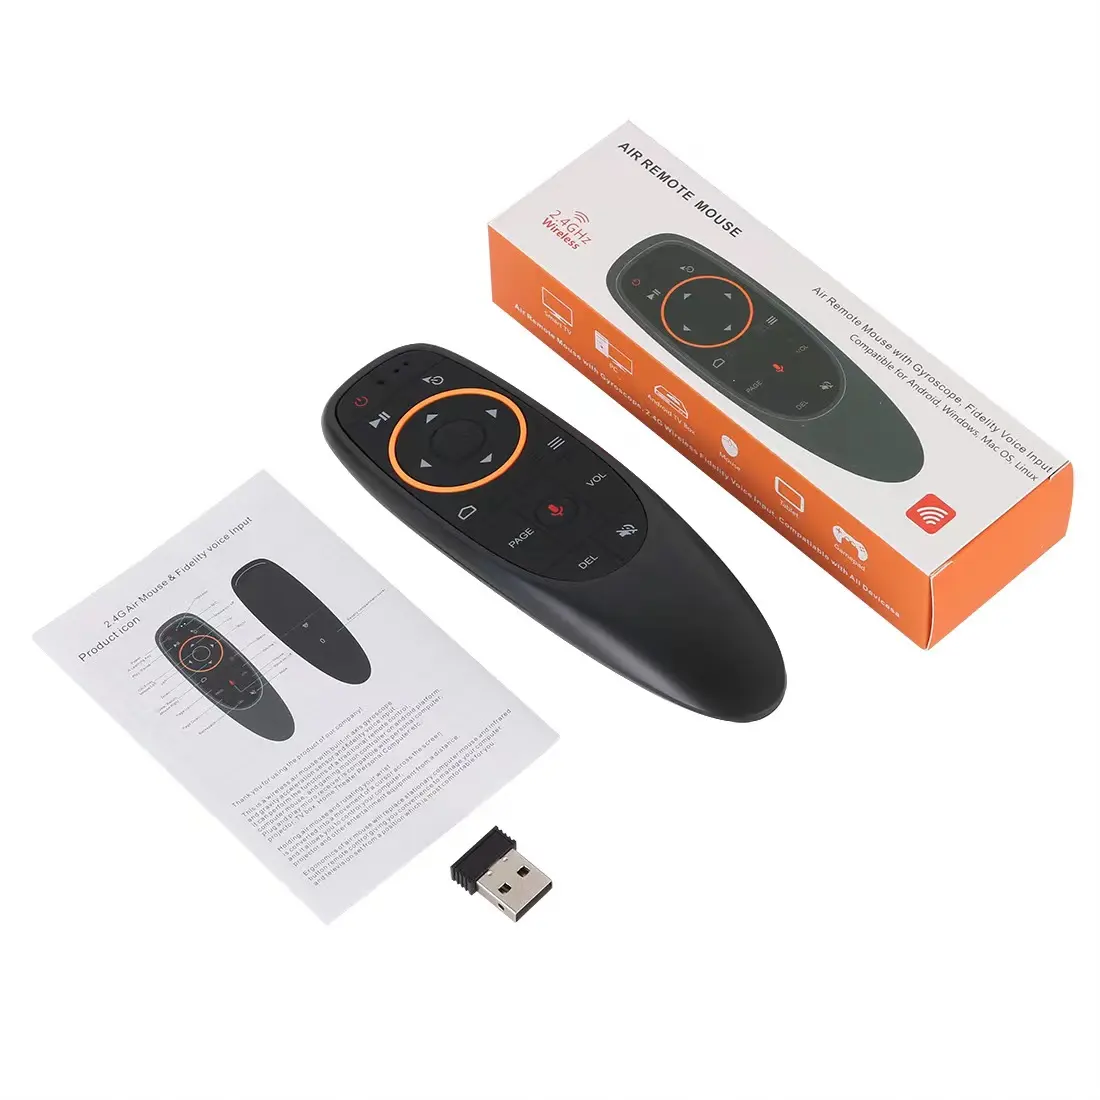 Controle remoto g10s air mouse de voz, controle remoto 2.4g sem fio, giroscópio, aprendizado para h96 max x88 pro x96 max, android, tv box hk1